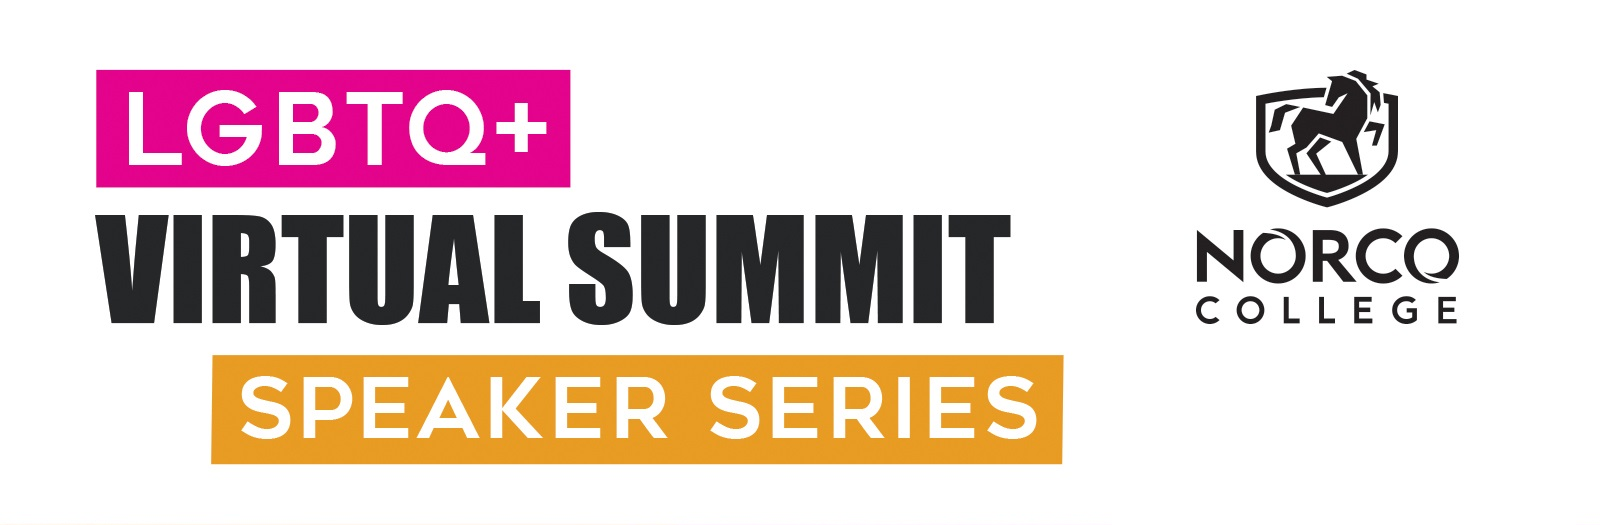 2021 LGBTQPlus Virtual Summit Speaker Series logo